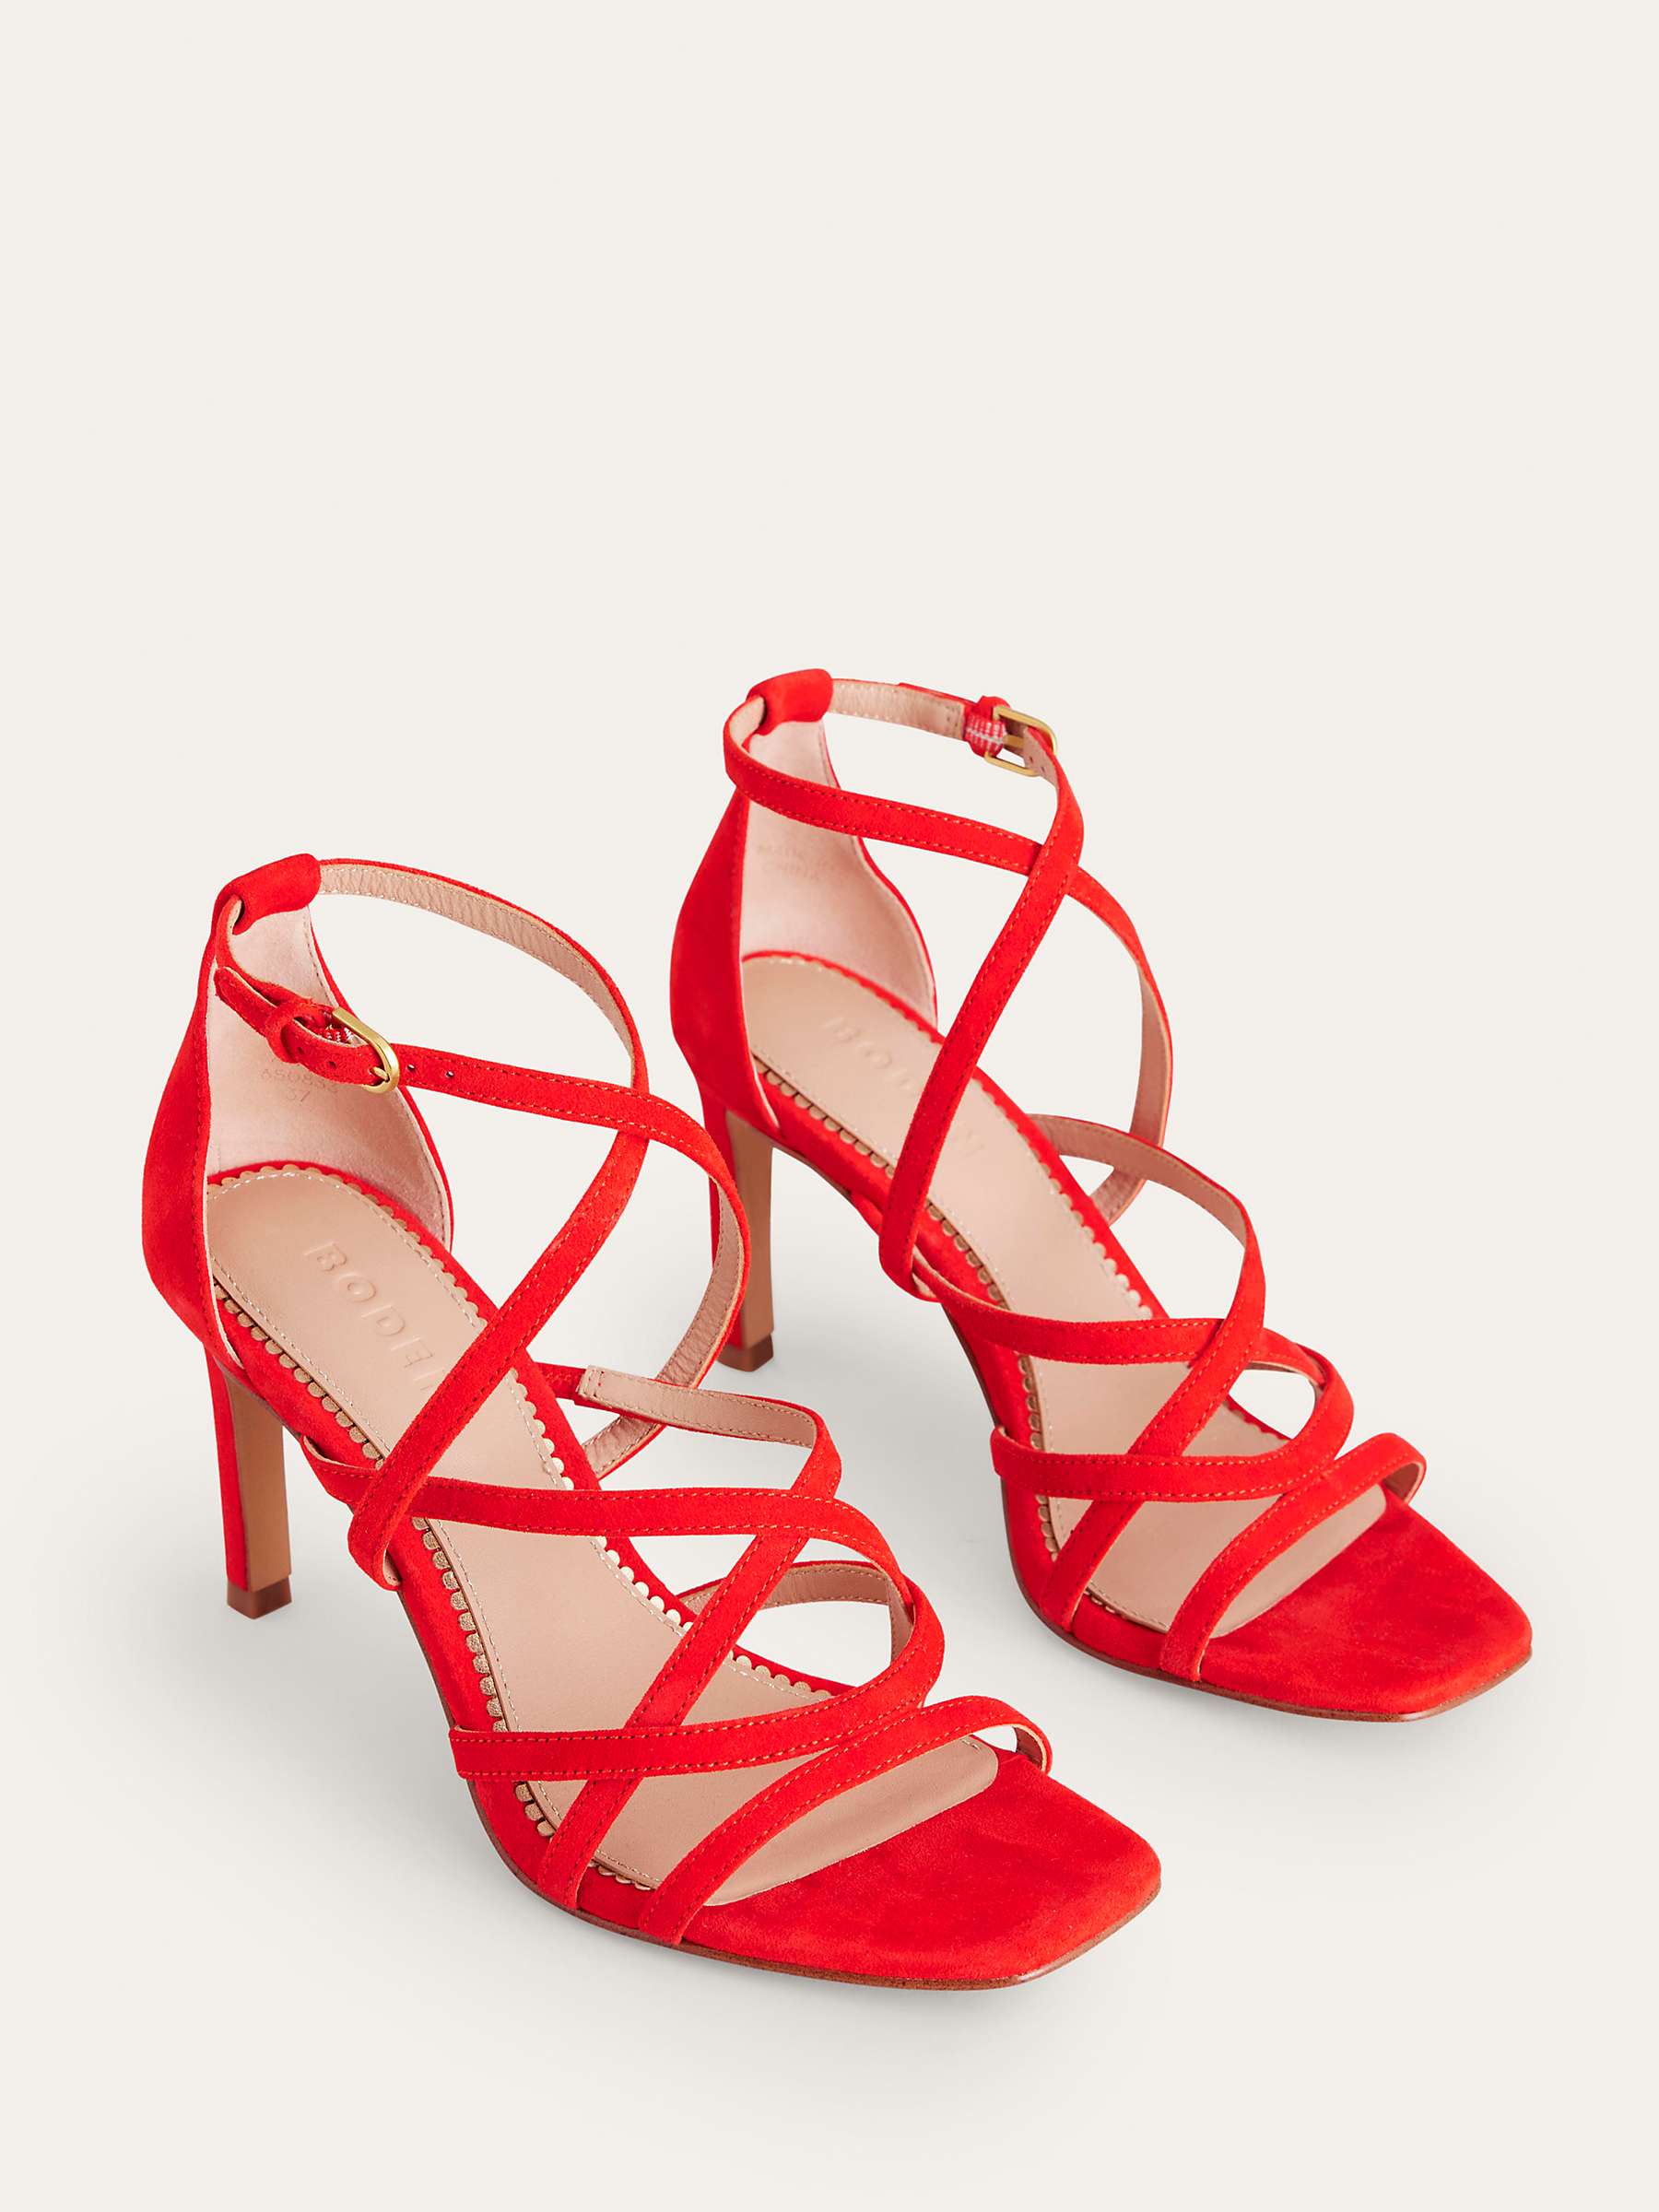 Buy Boden Multi Strap Suede High Heel Sandals, Post Box Red Online at johnlewis.com